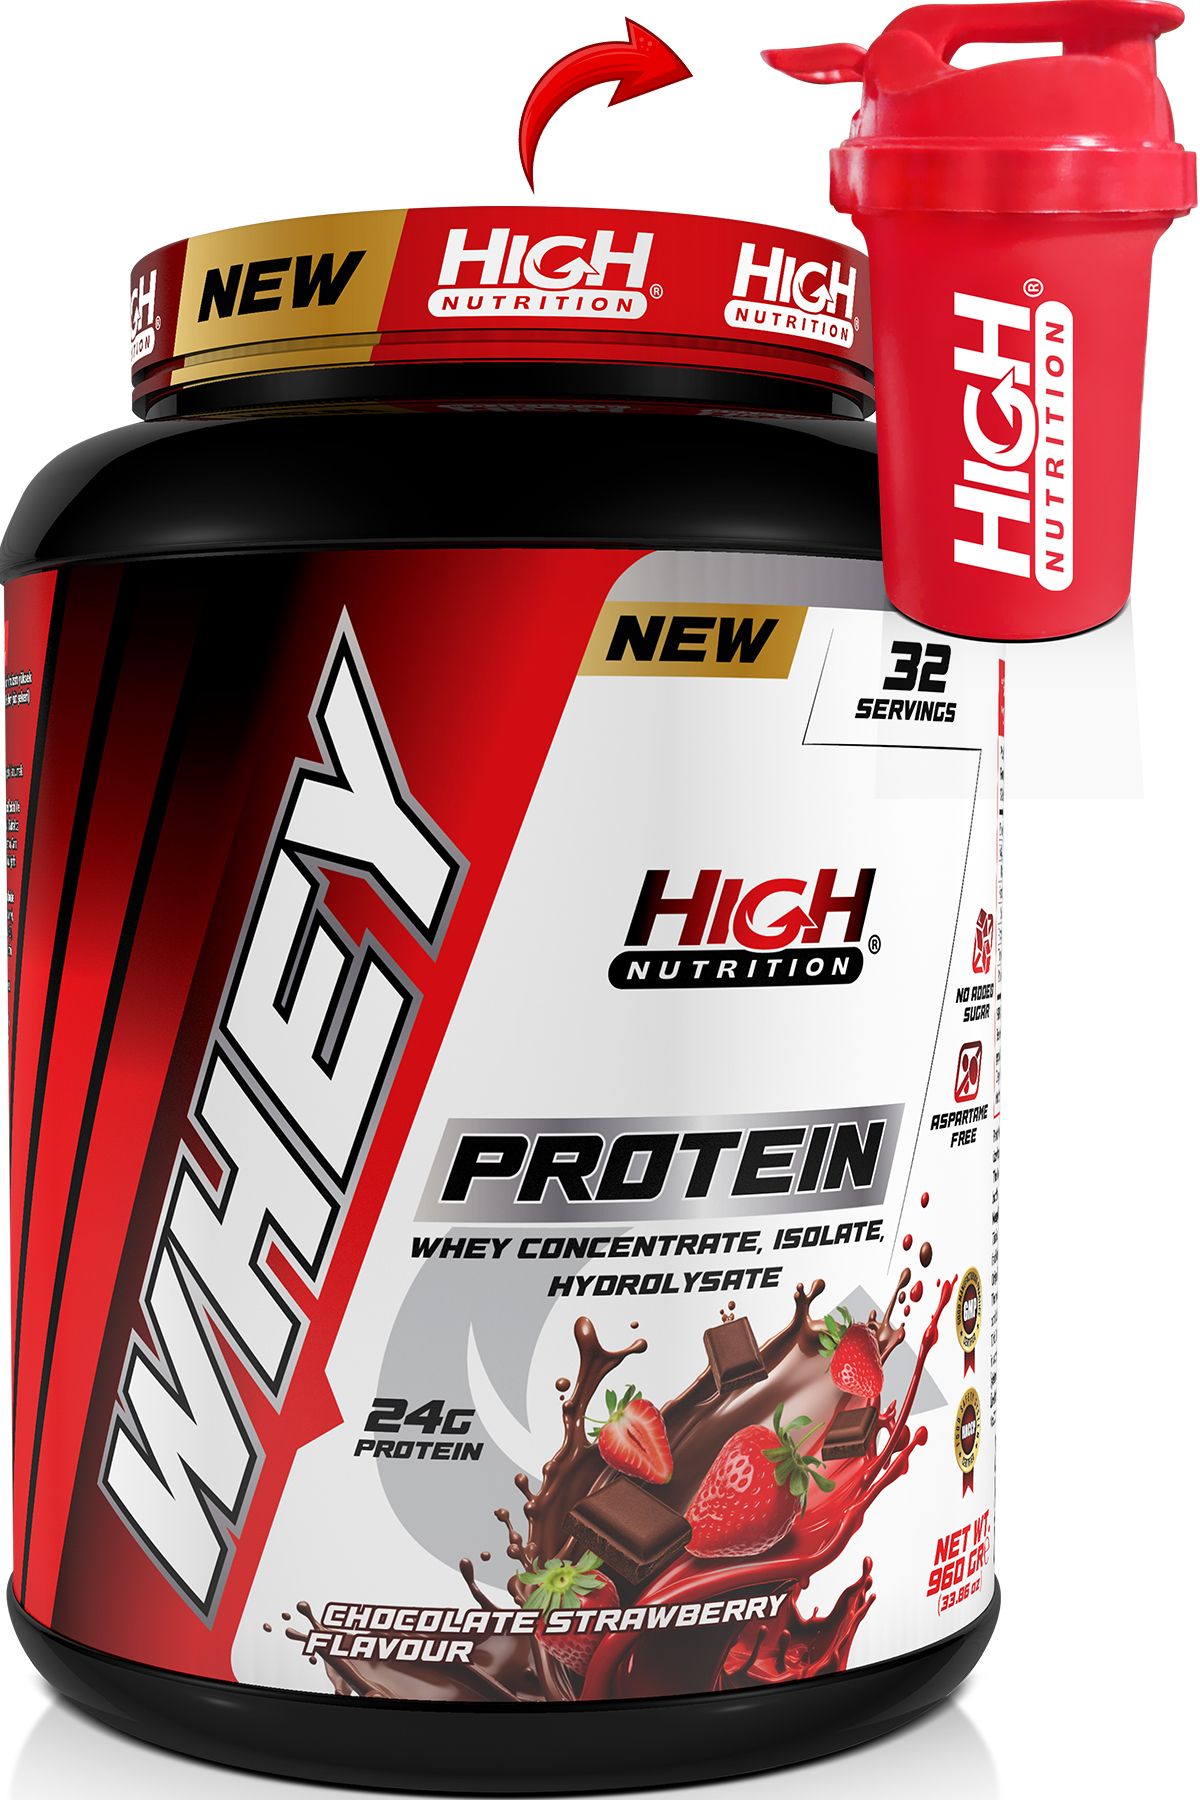 High Nutrition Whey Protein 960 gr Çikolata Çilek Aromalı Protein Tozu 24 gram Protein 32 Servis Shaker Hediye